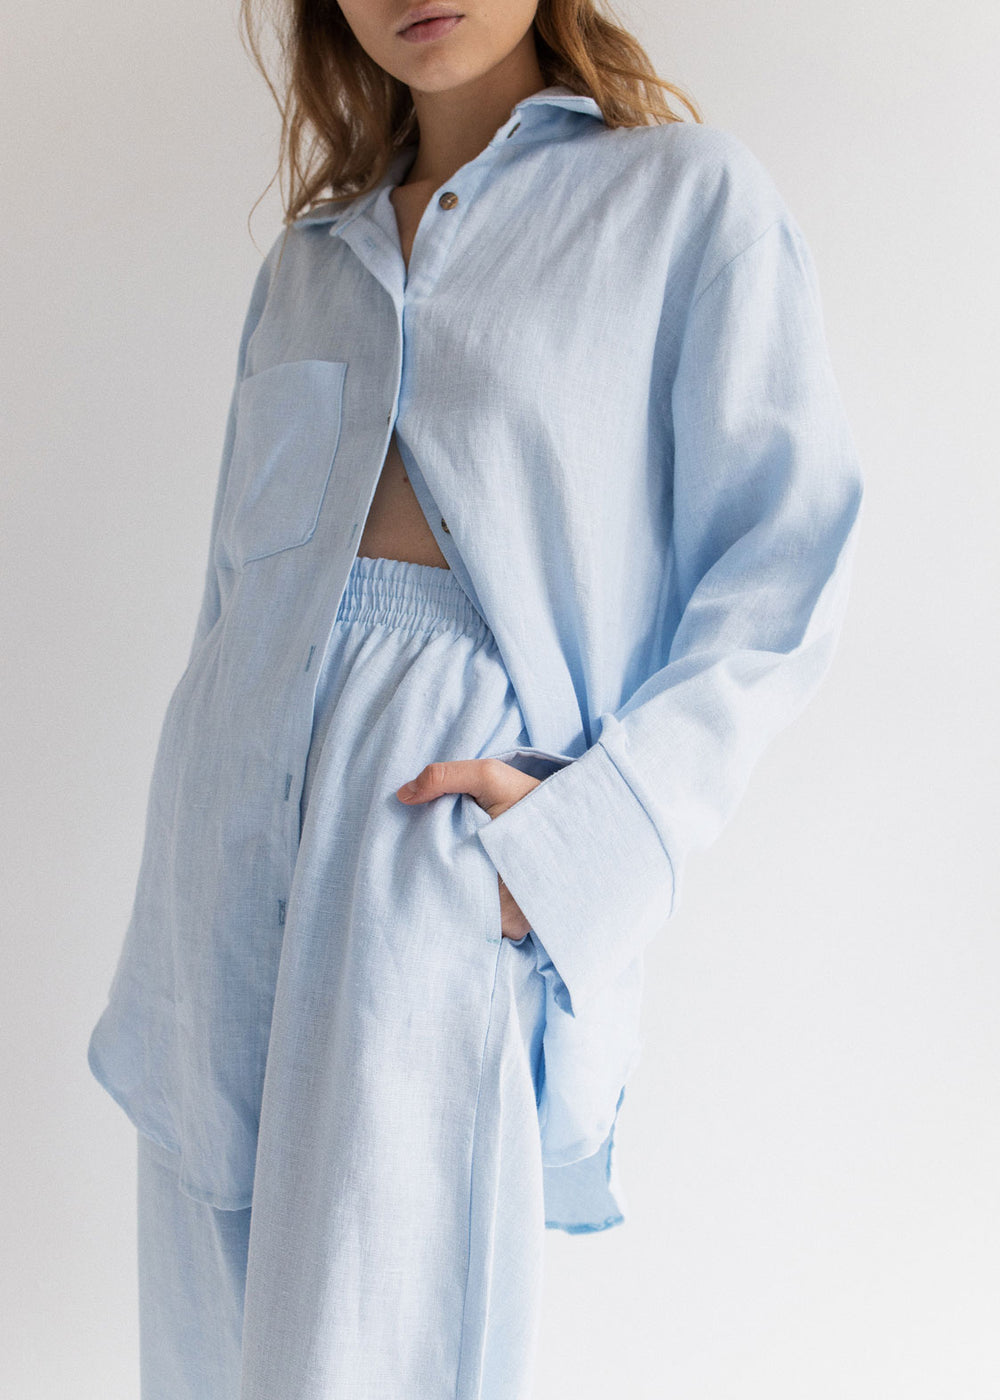 Lera Wear - All day Wear Pajamas – Lera All Day Wear Pajamas